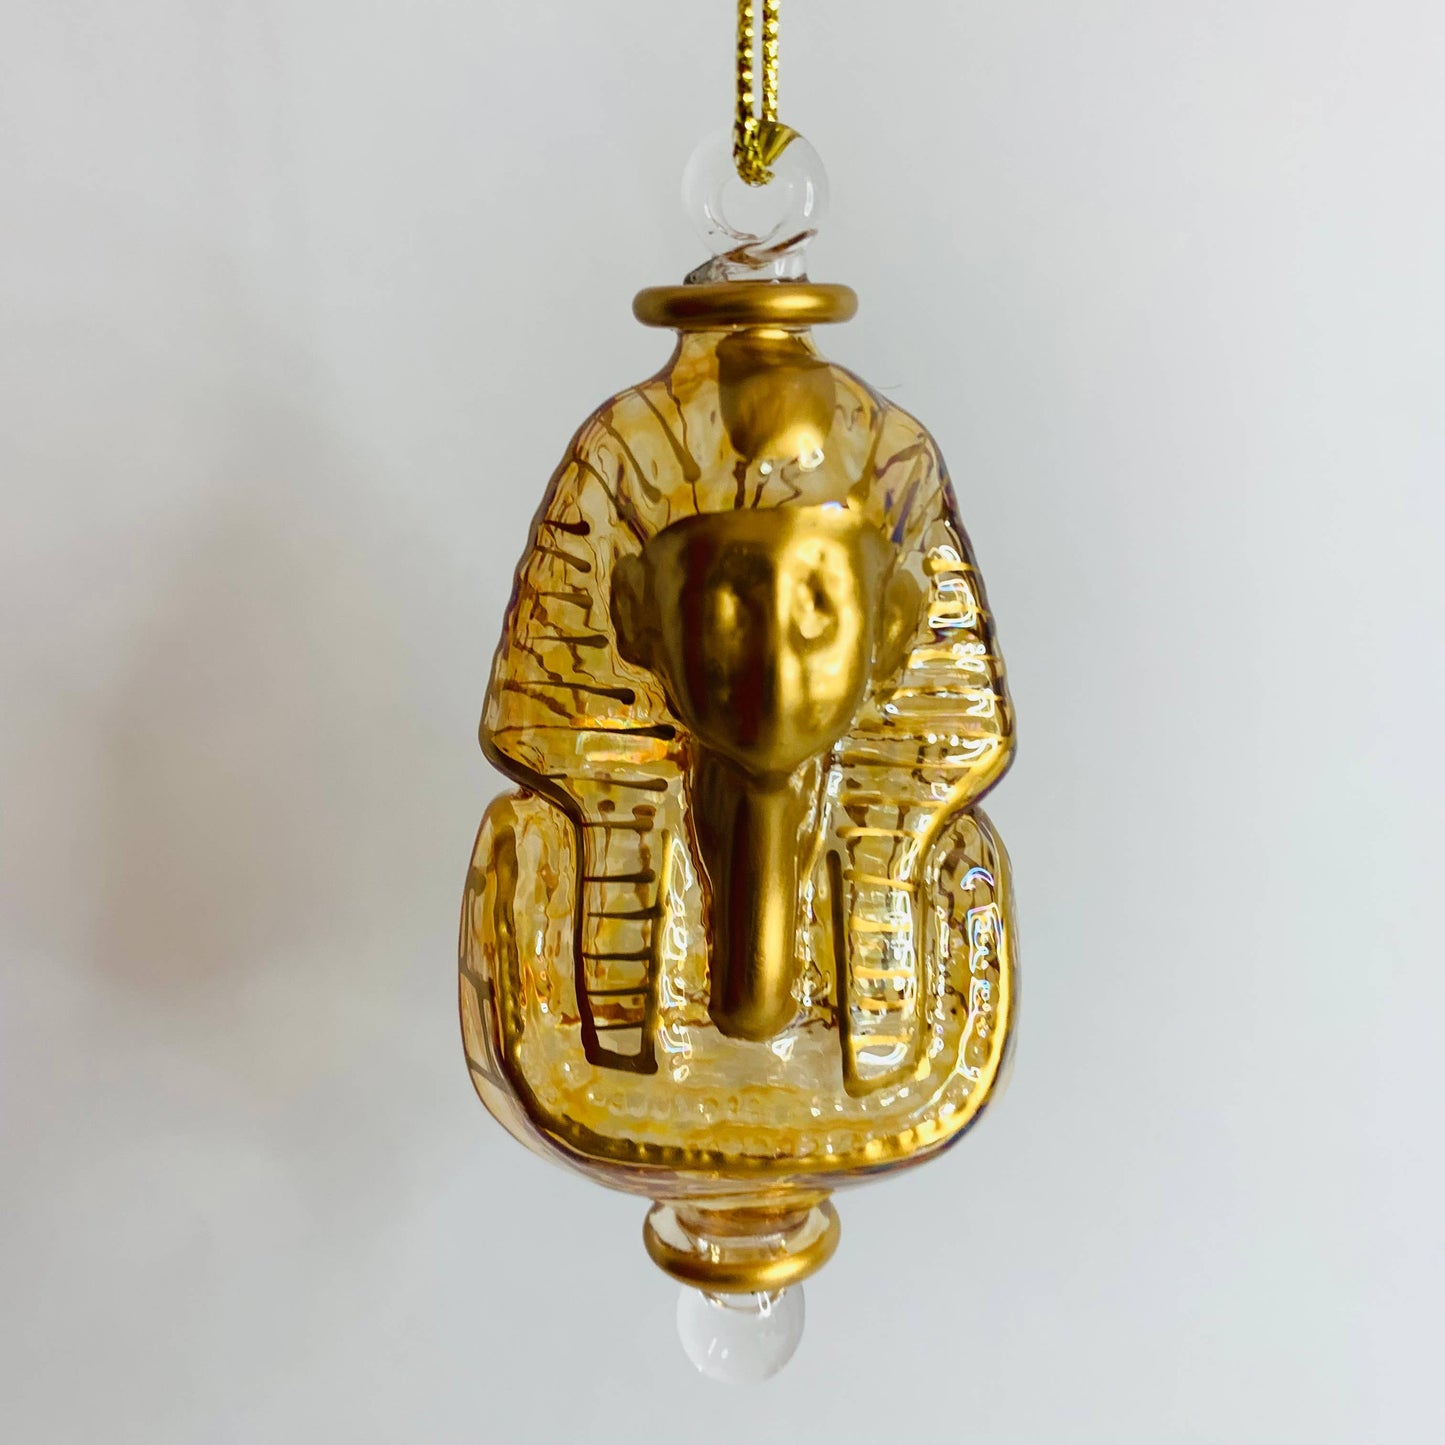 Blown Glass Ornament - Gold Mask of King Tut